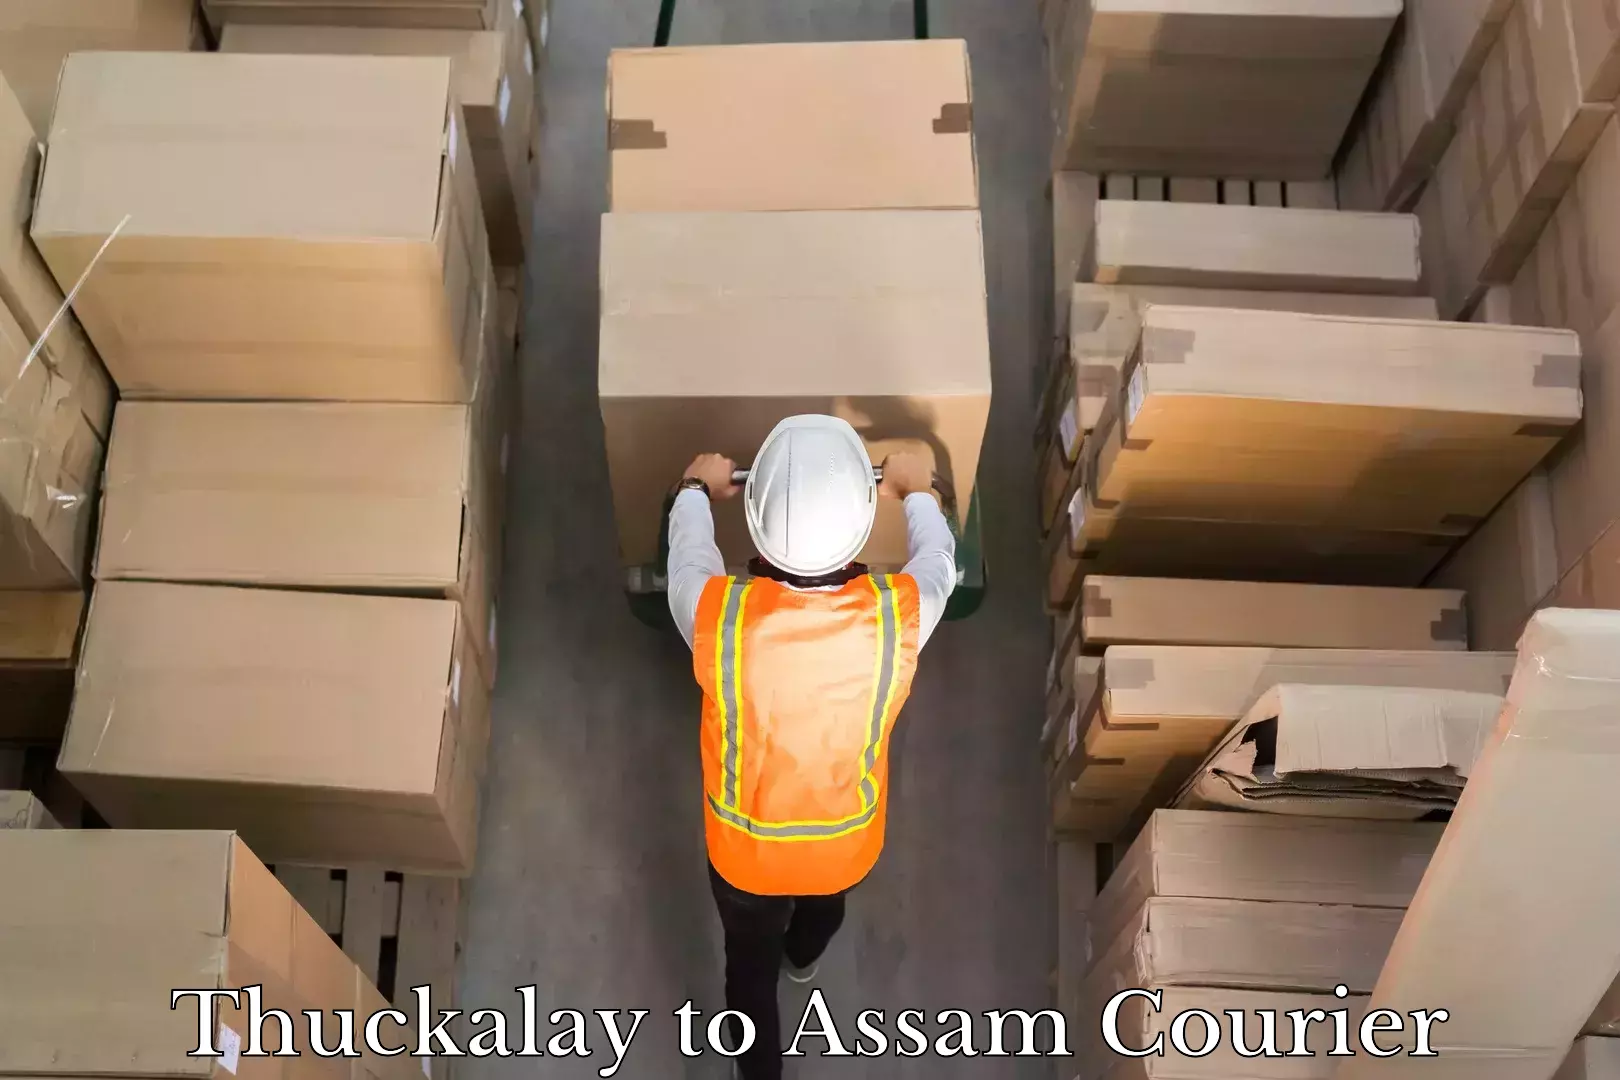 Courier service partnerships Thuckalay to Assam